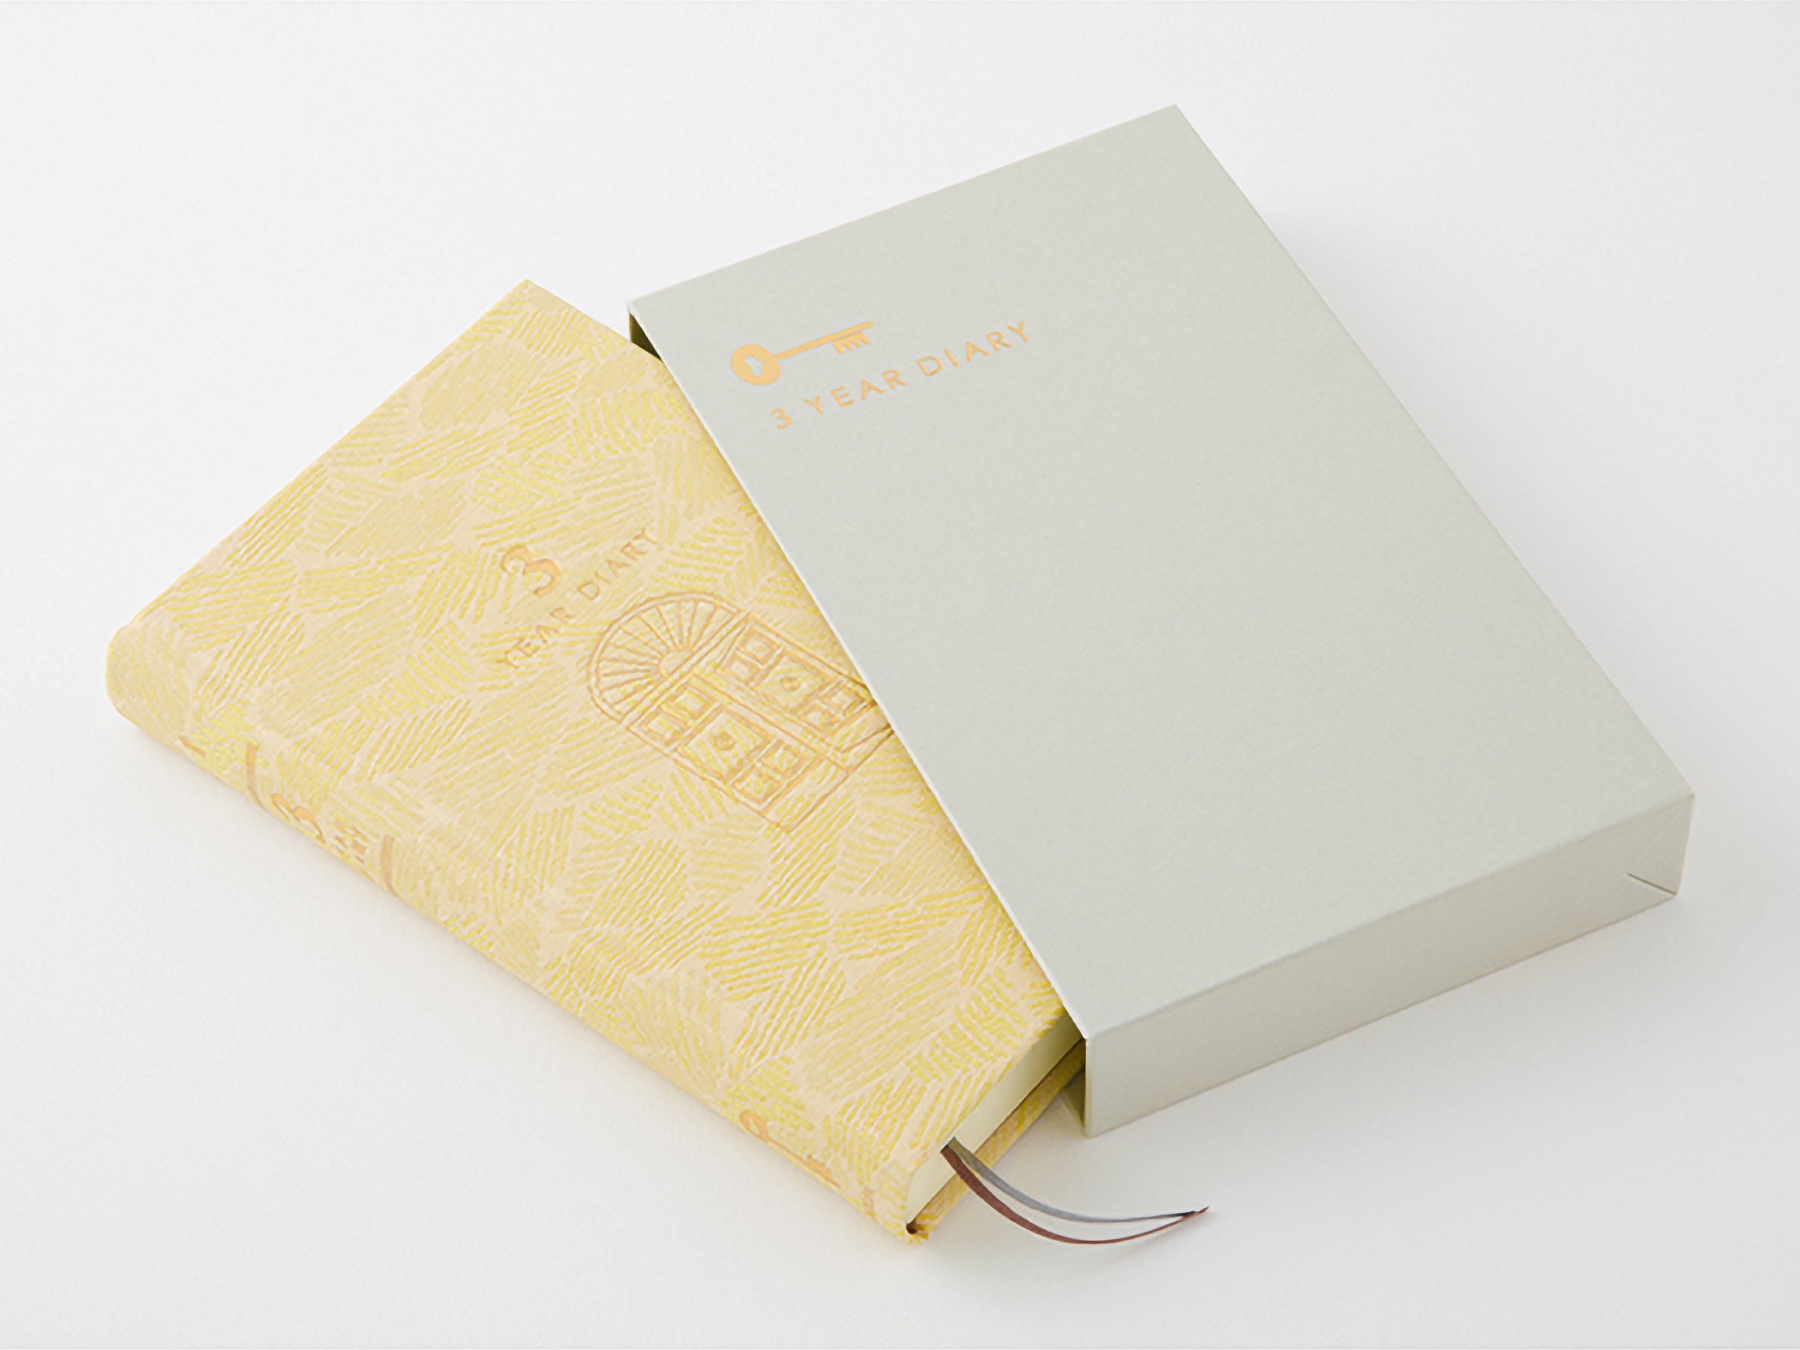 Midori 3 Years Diary Gate Kyo-ori Yellow Limited Edition